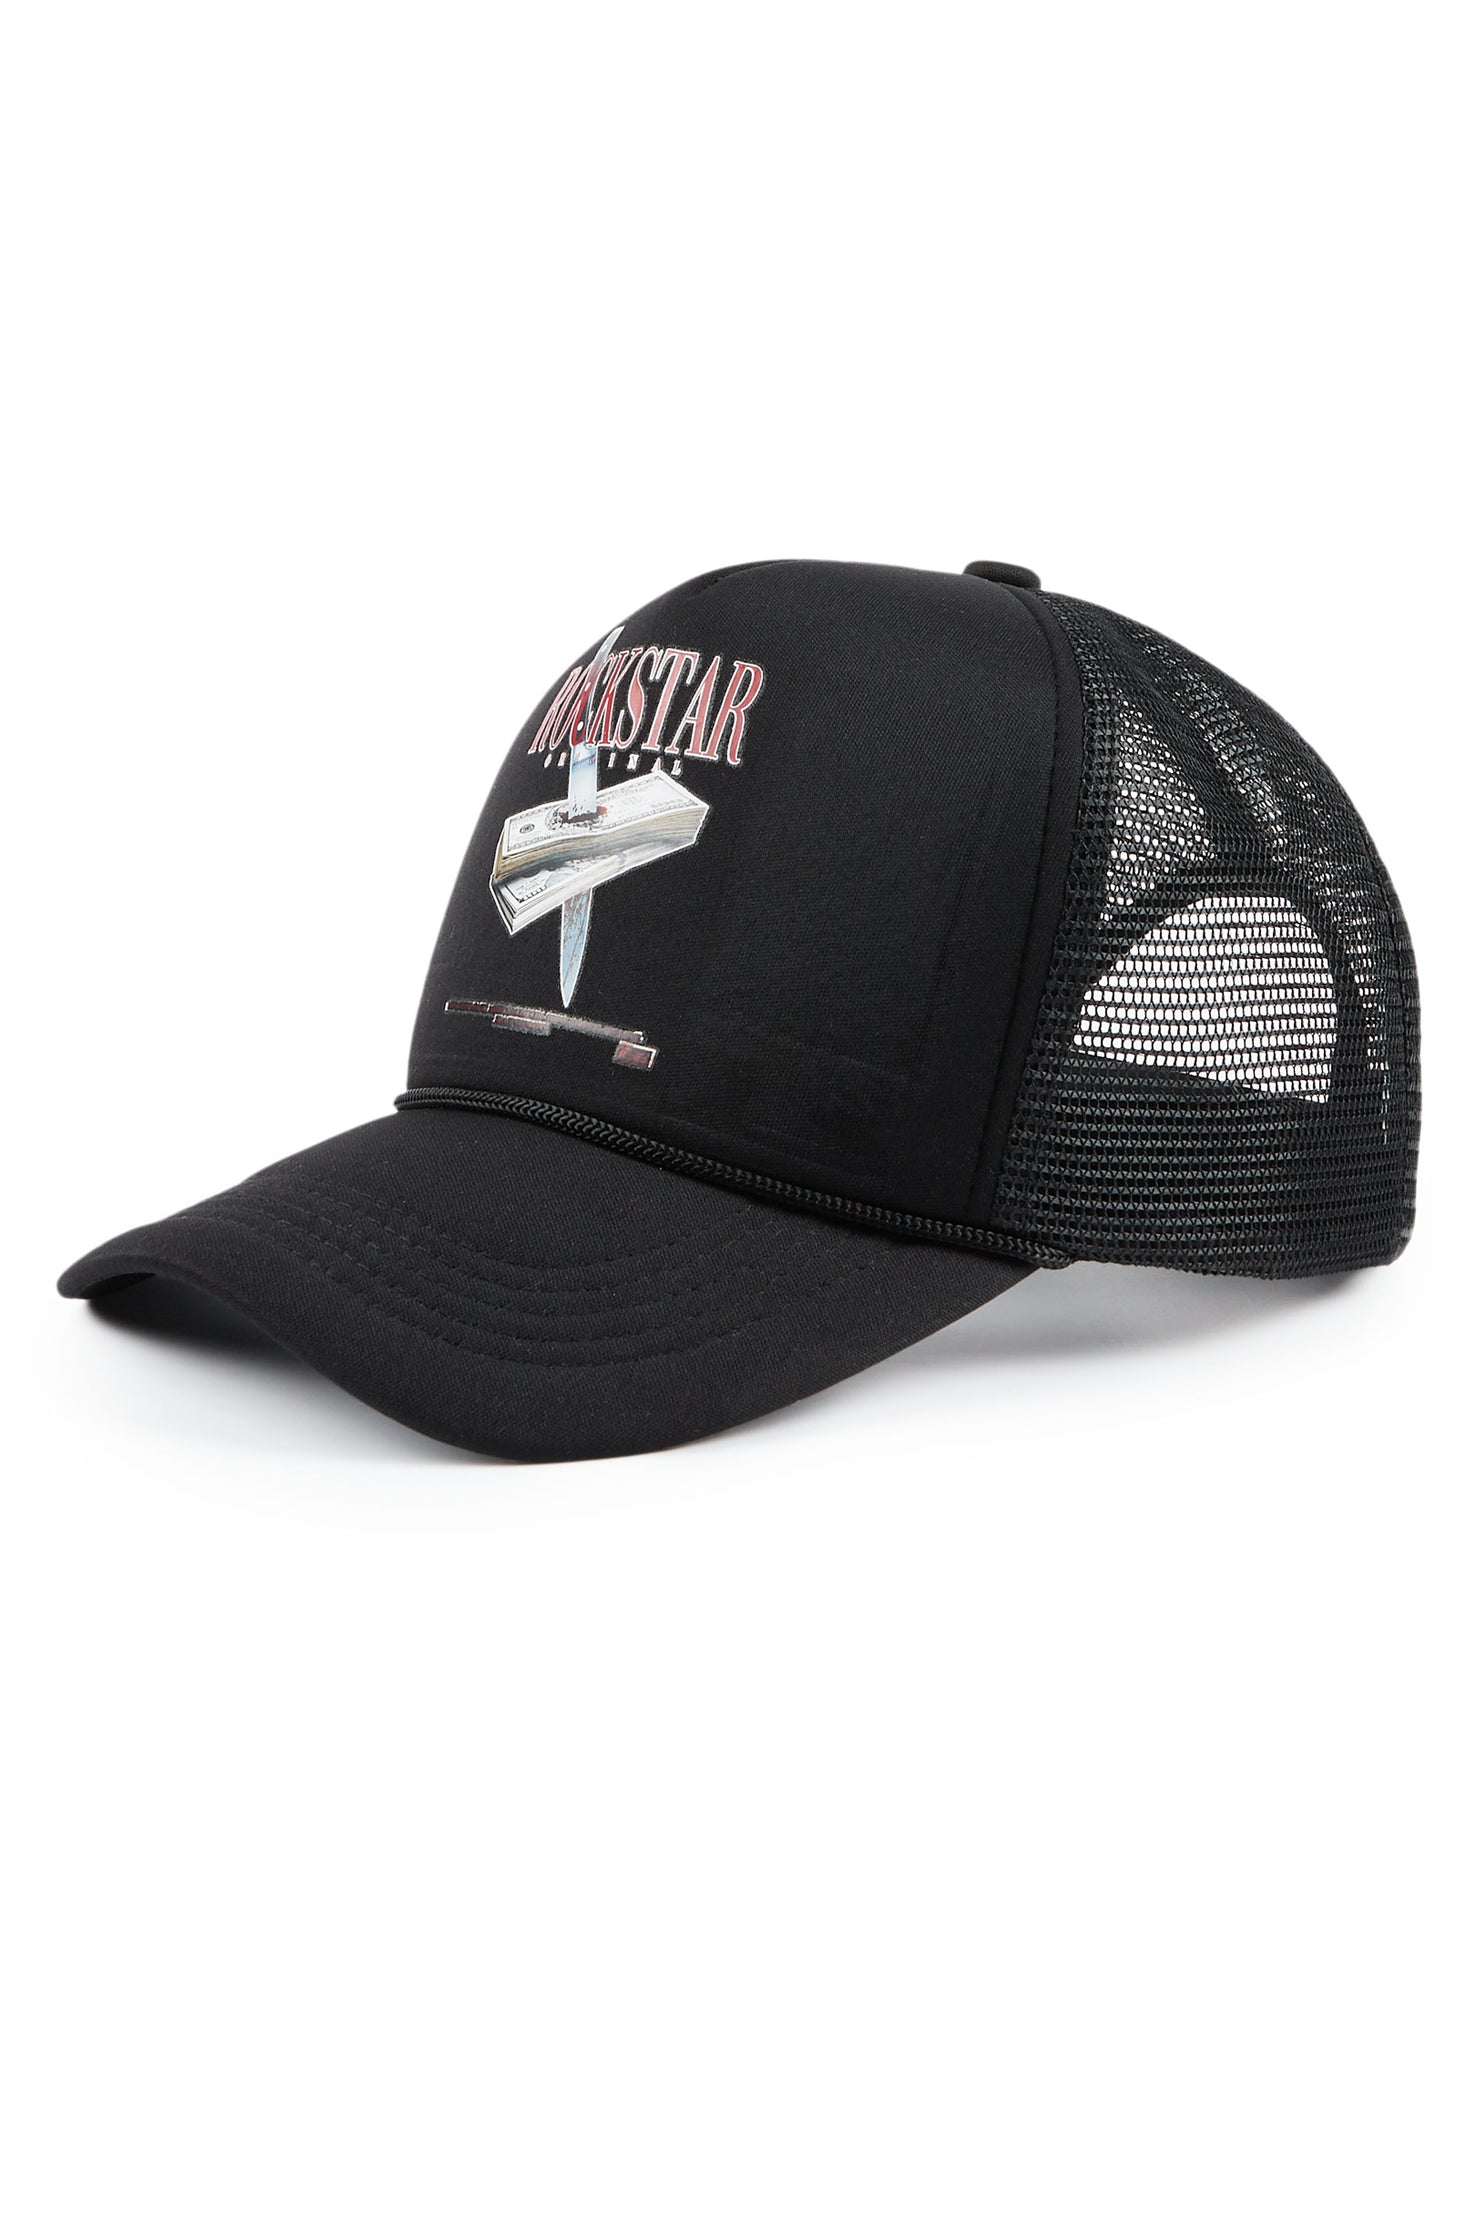 Dayte Nite Black Trucker Hat